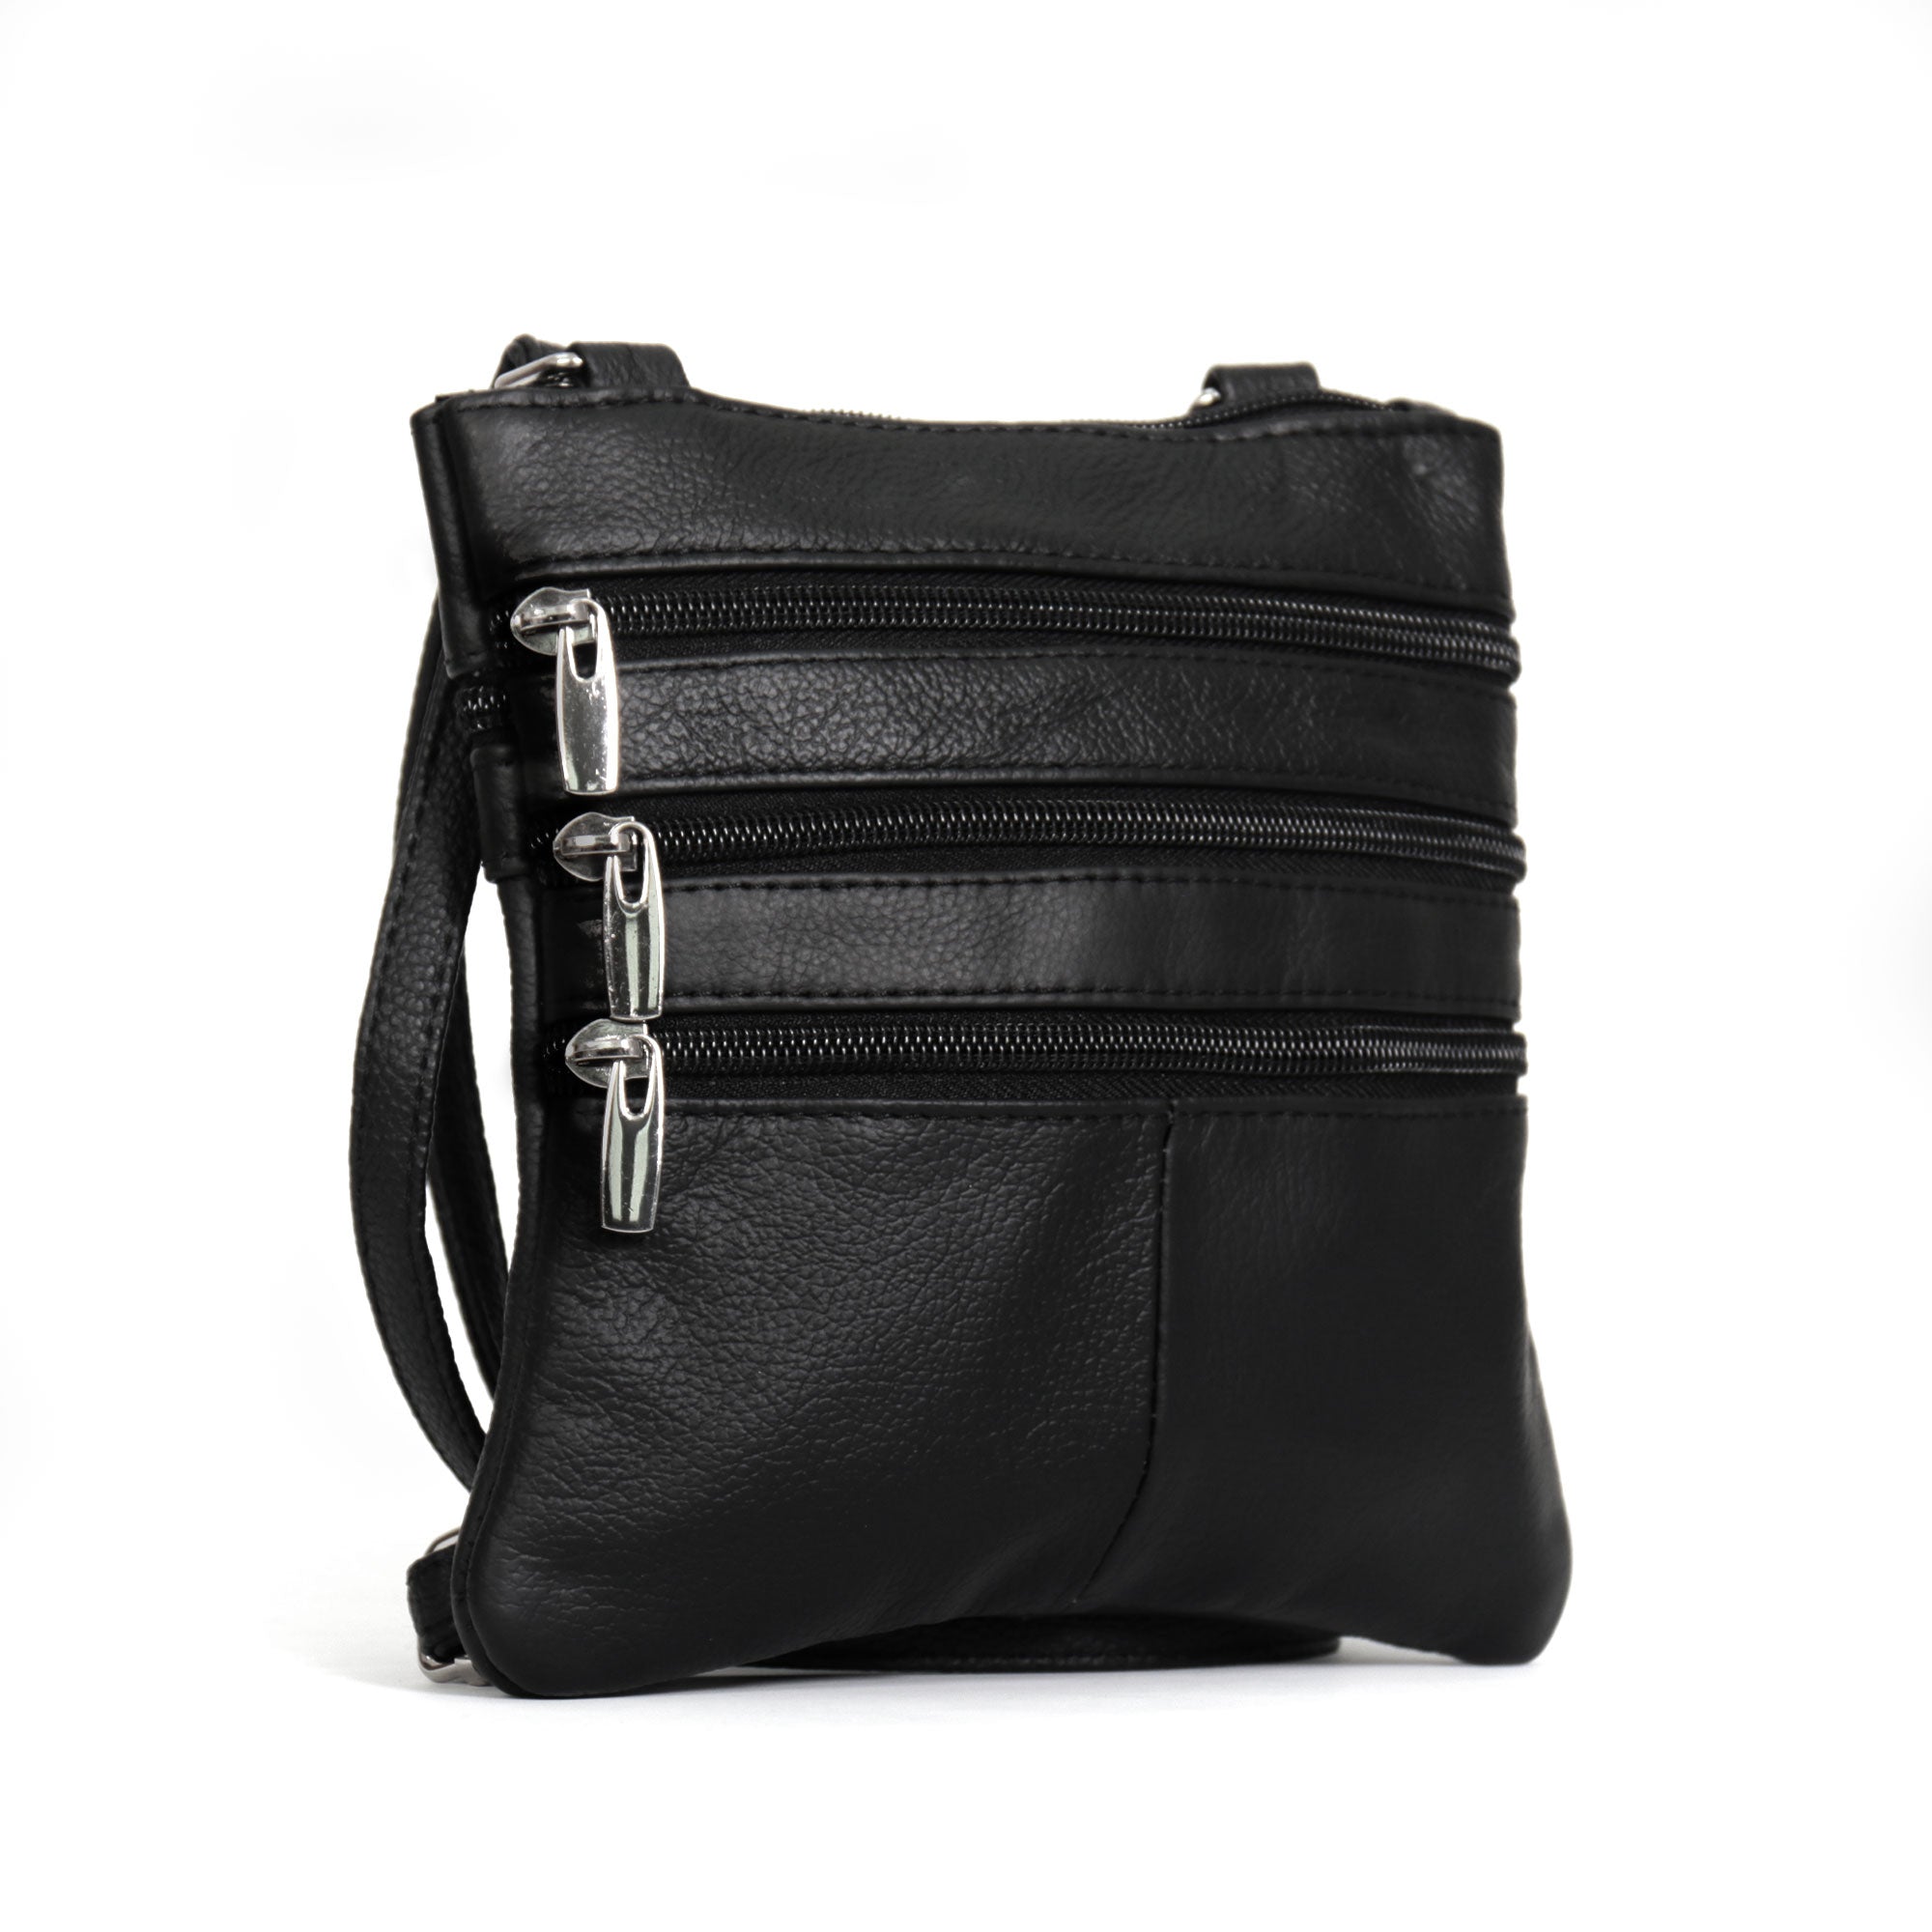 Unique Leather Purse, Personalised Genuine Leather Bag, Black Handbag, Gift  for Women, Handmade, Made in Ukraine - Etsy